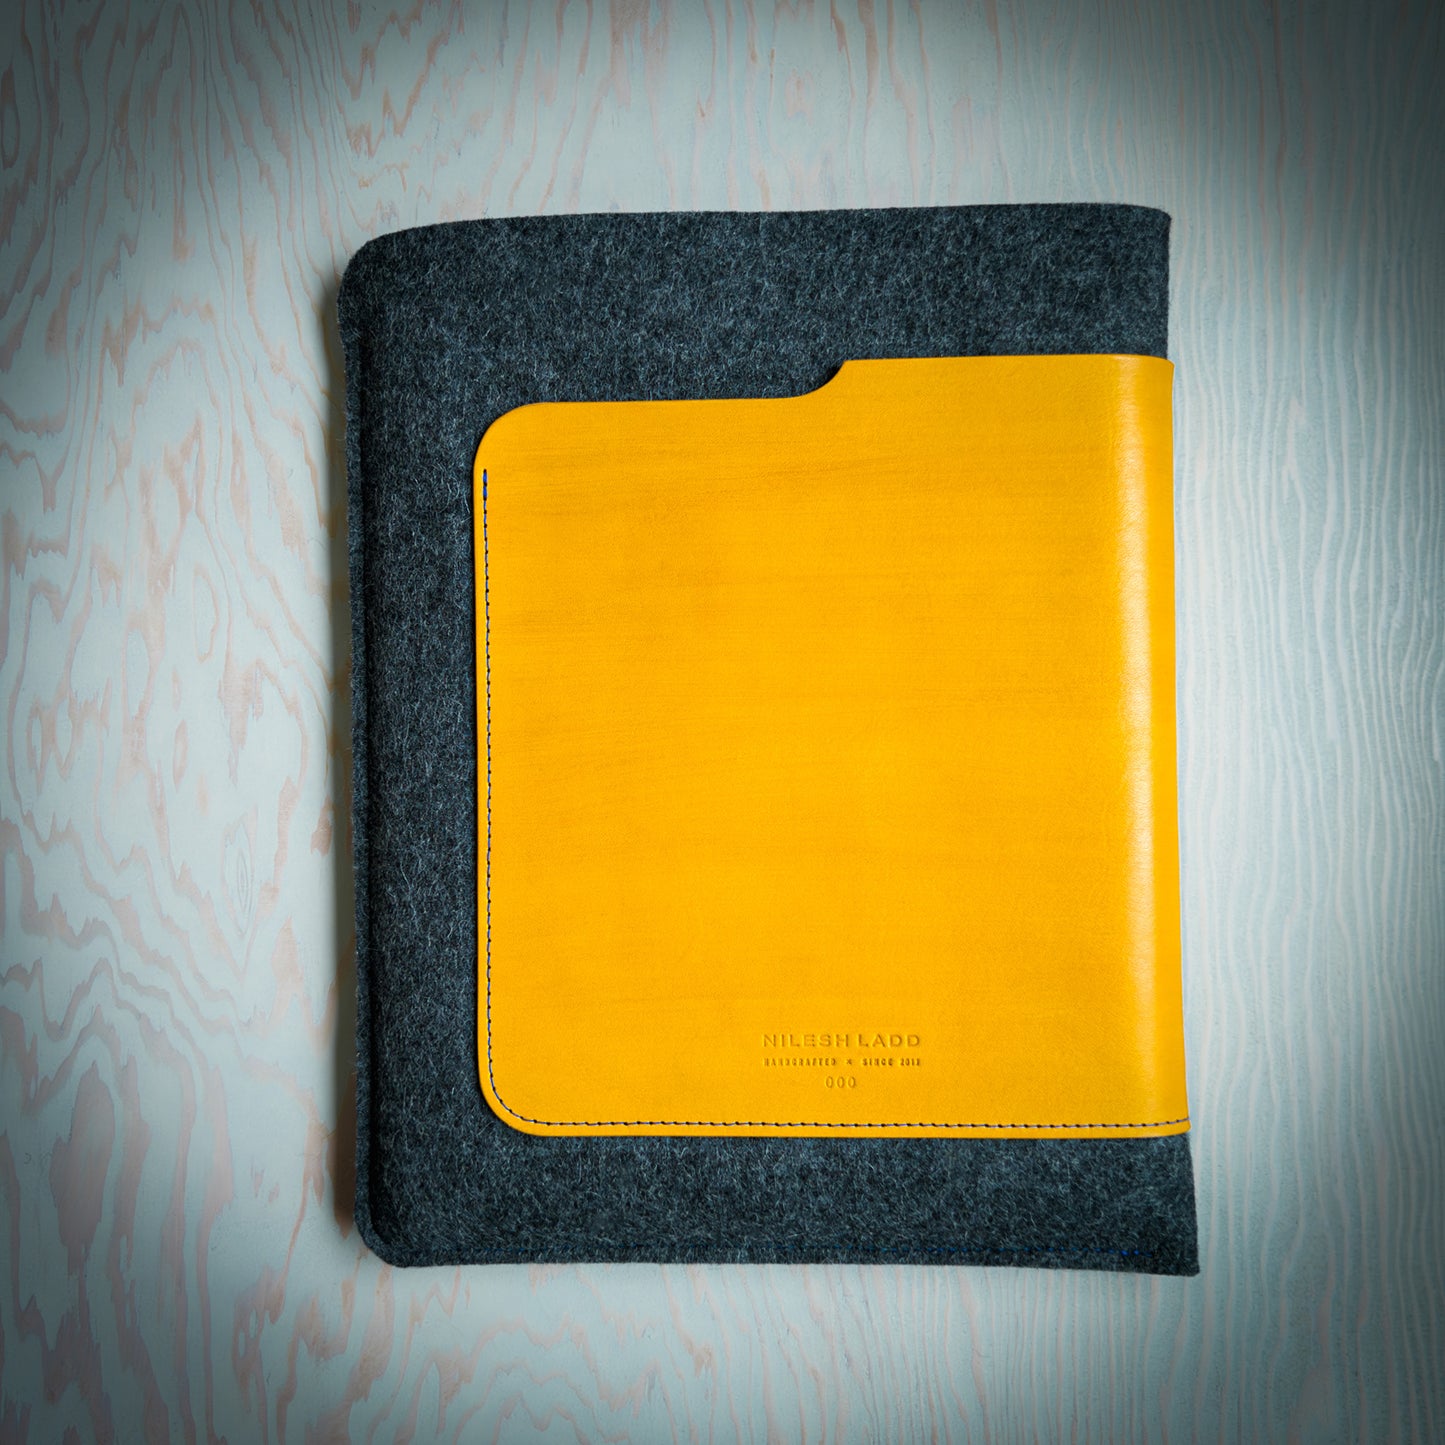 iPad Sleeve in Yellow Leather and Wool Felt Handmade in Canada